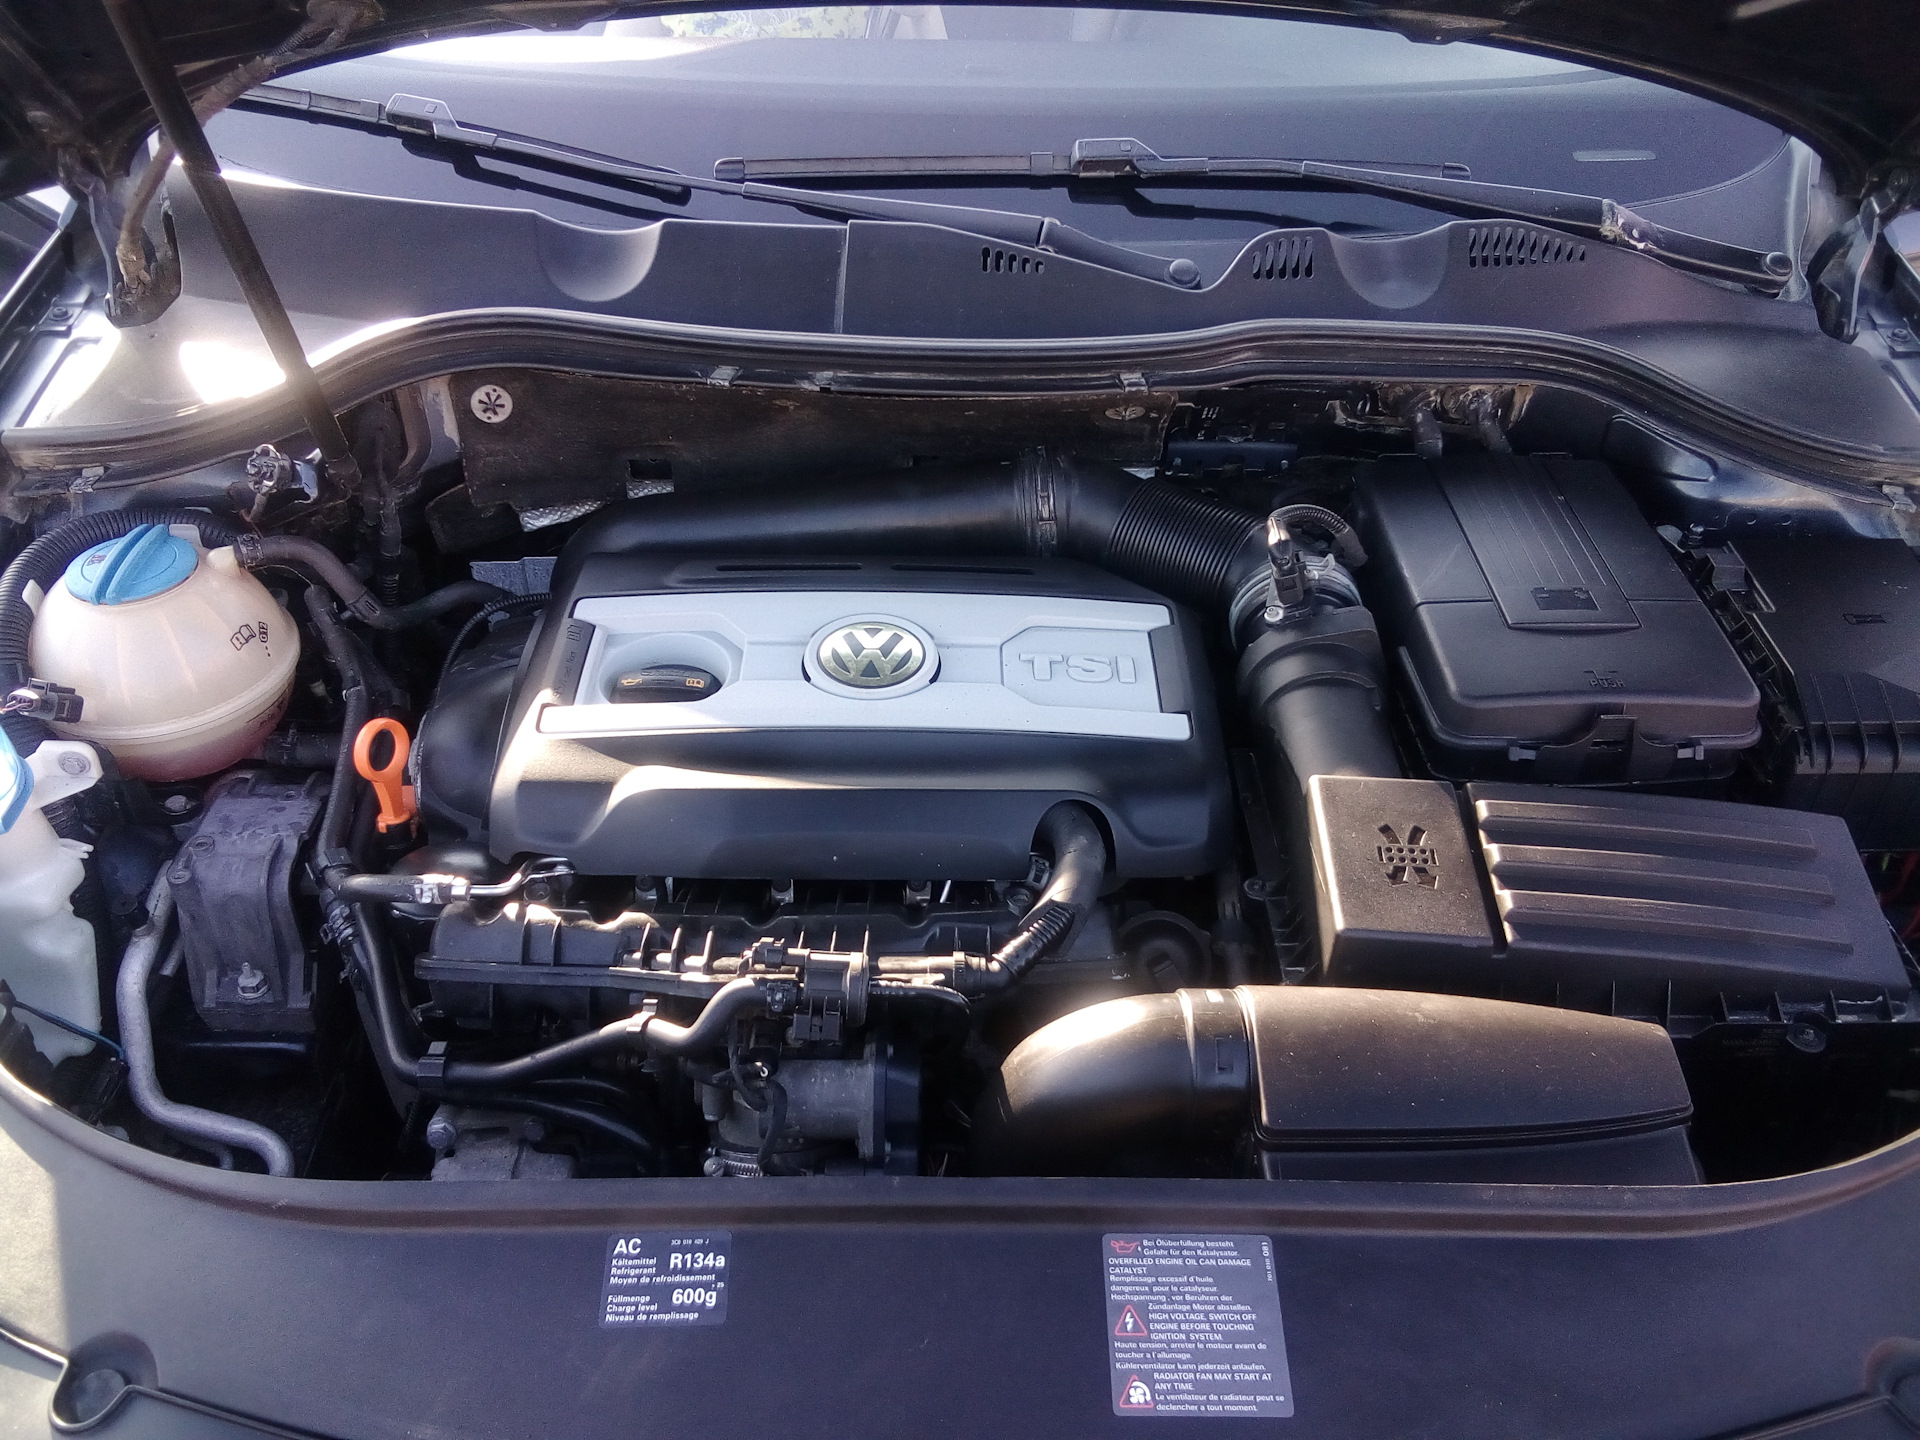 Двигатель пассат б6 1.8. Фольксваген Пассат б6 1.8 TSI. Подкапотка VW Passat b6 1.6. VW Passat b6 подкапотное пространство. Двигатель Фольксваген Пассат б7 1.8 TSI.